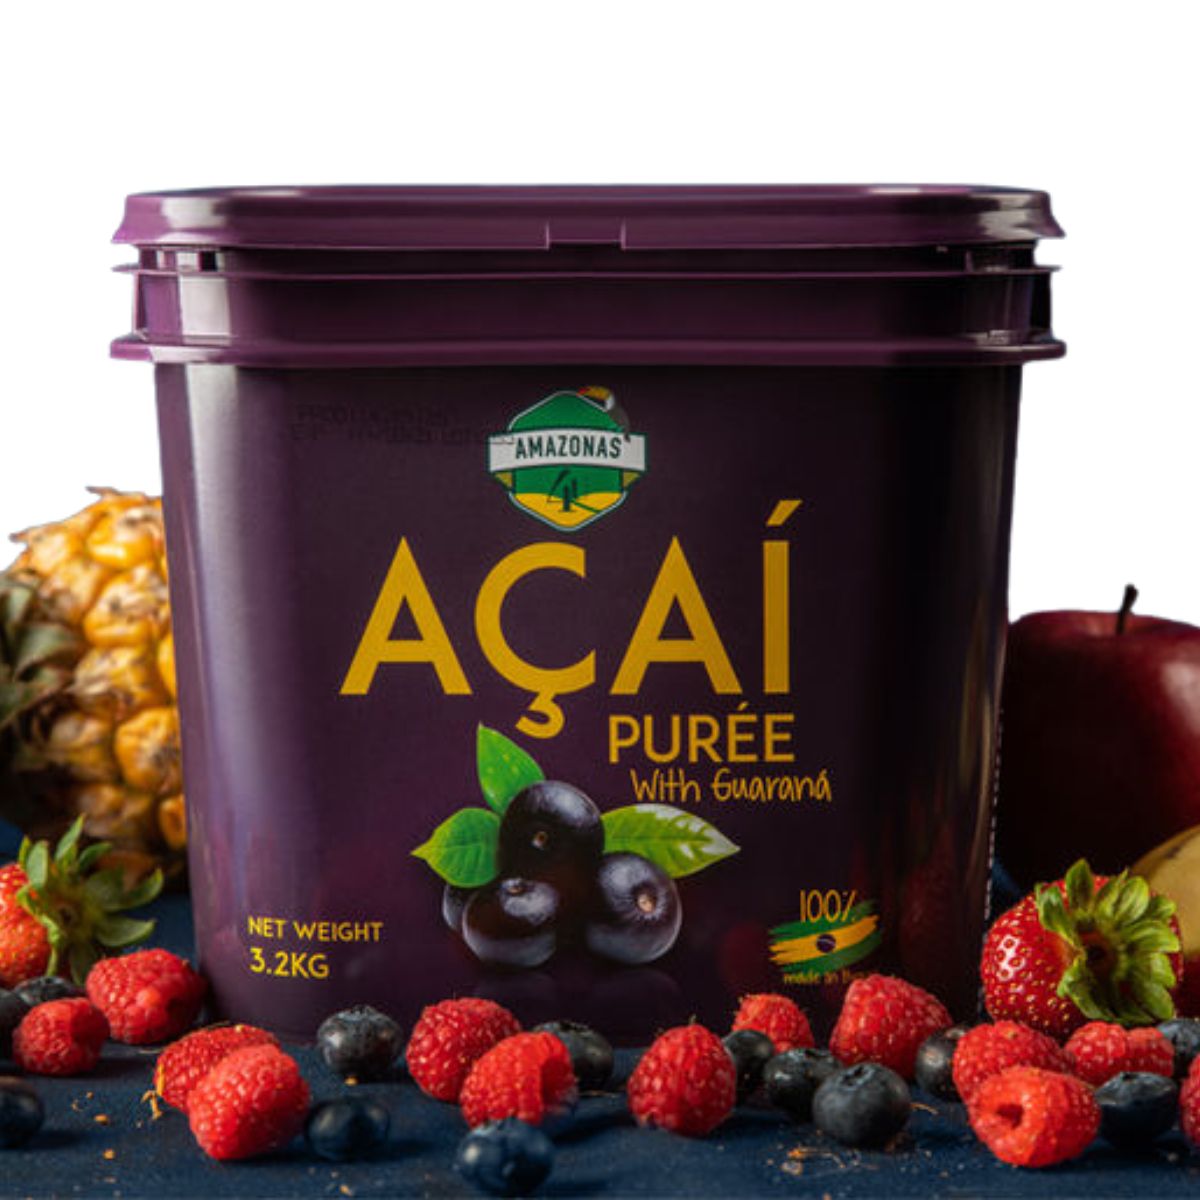 Acai-Puree-brazil-product-featured